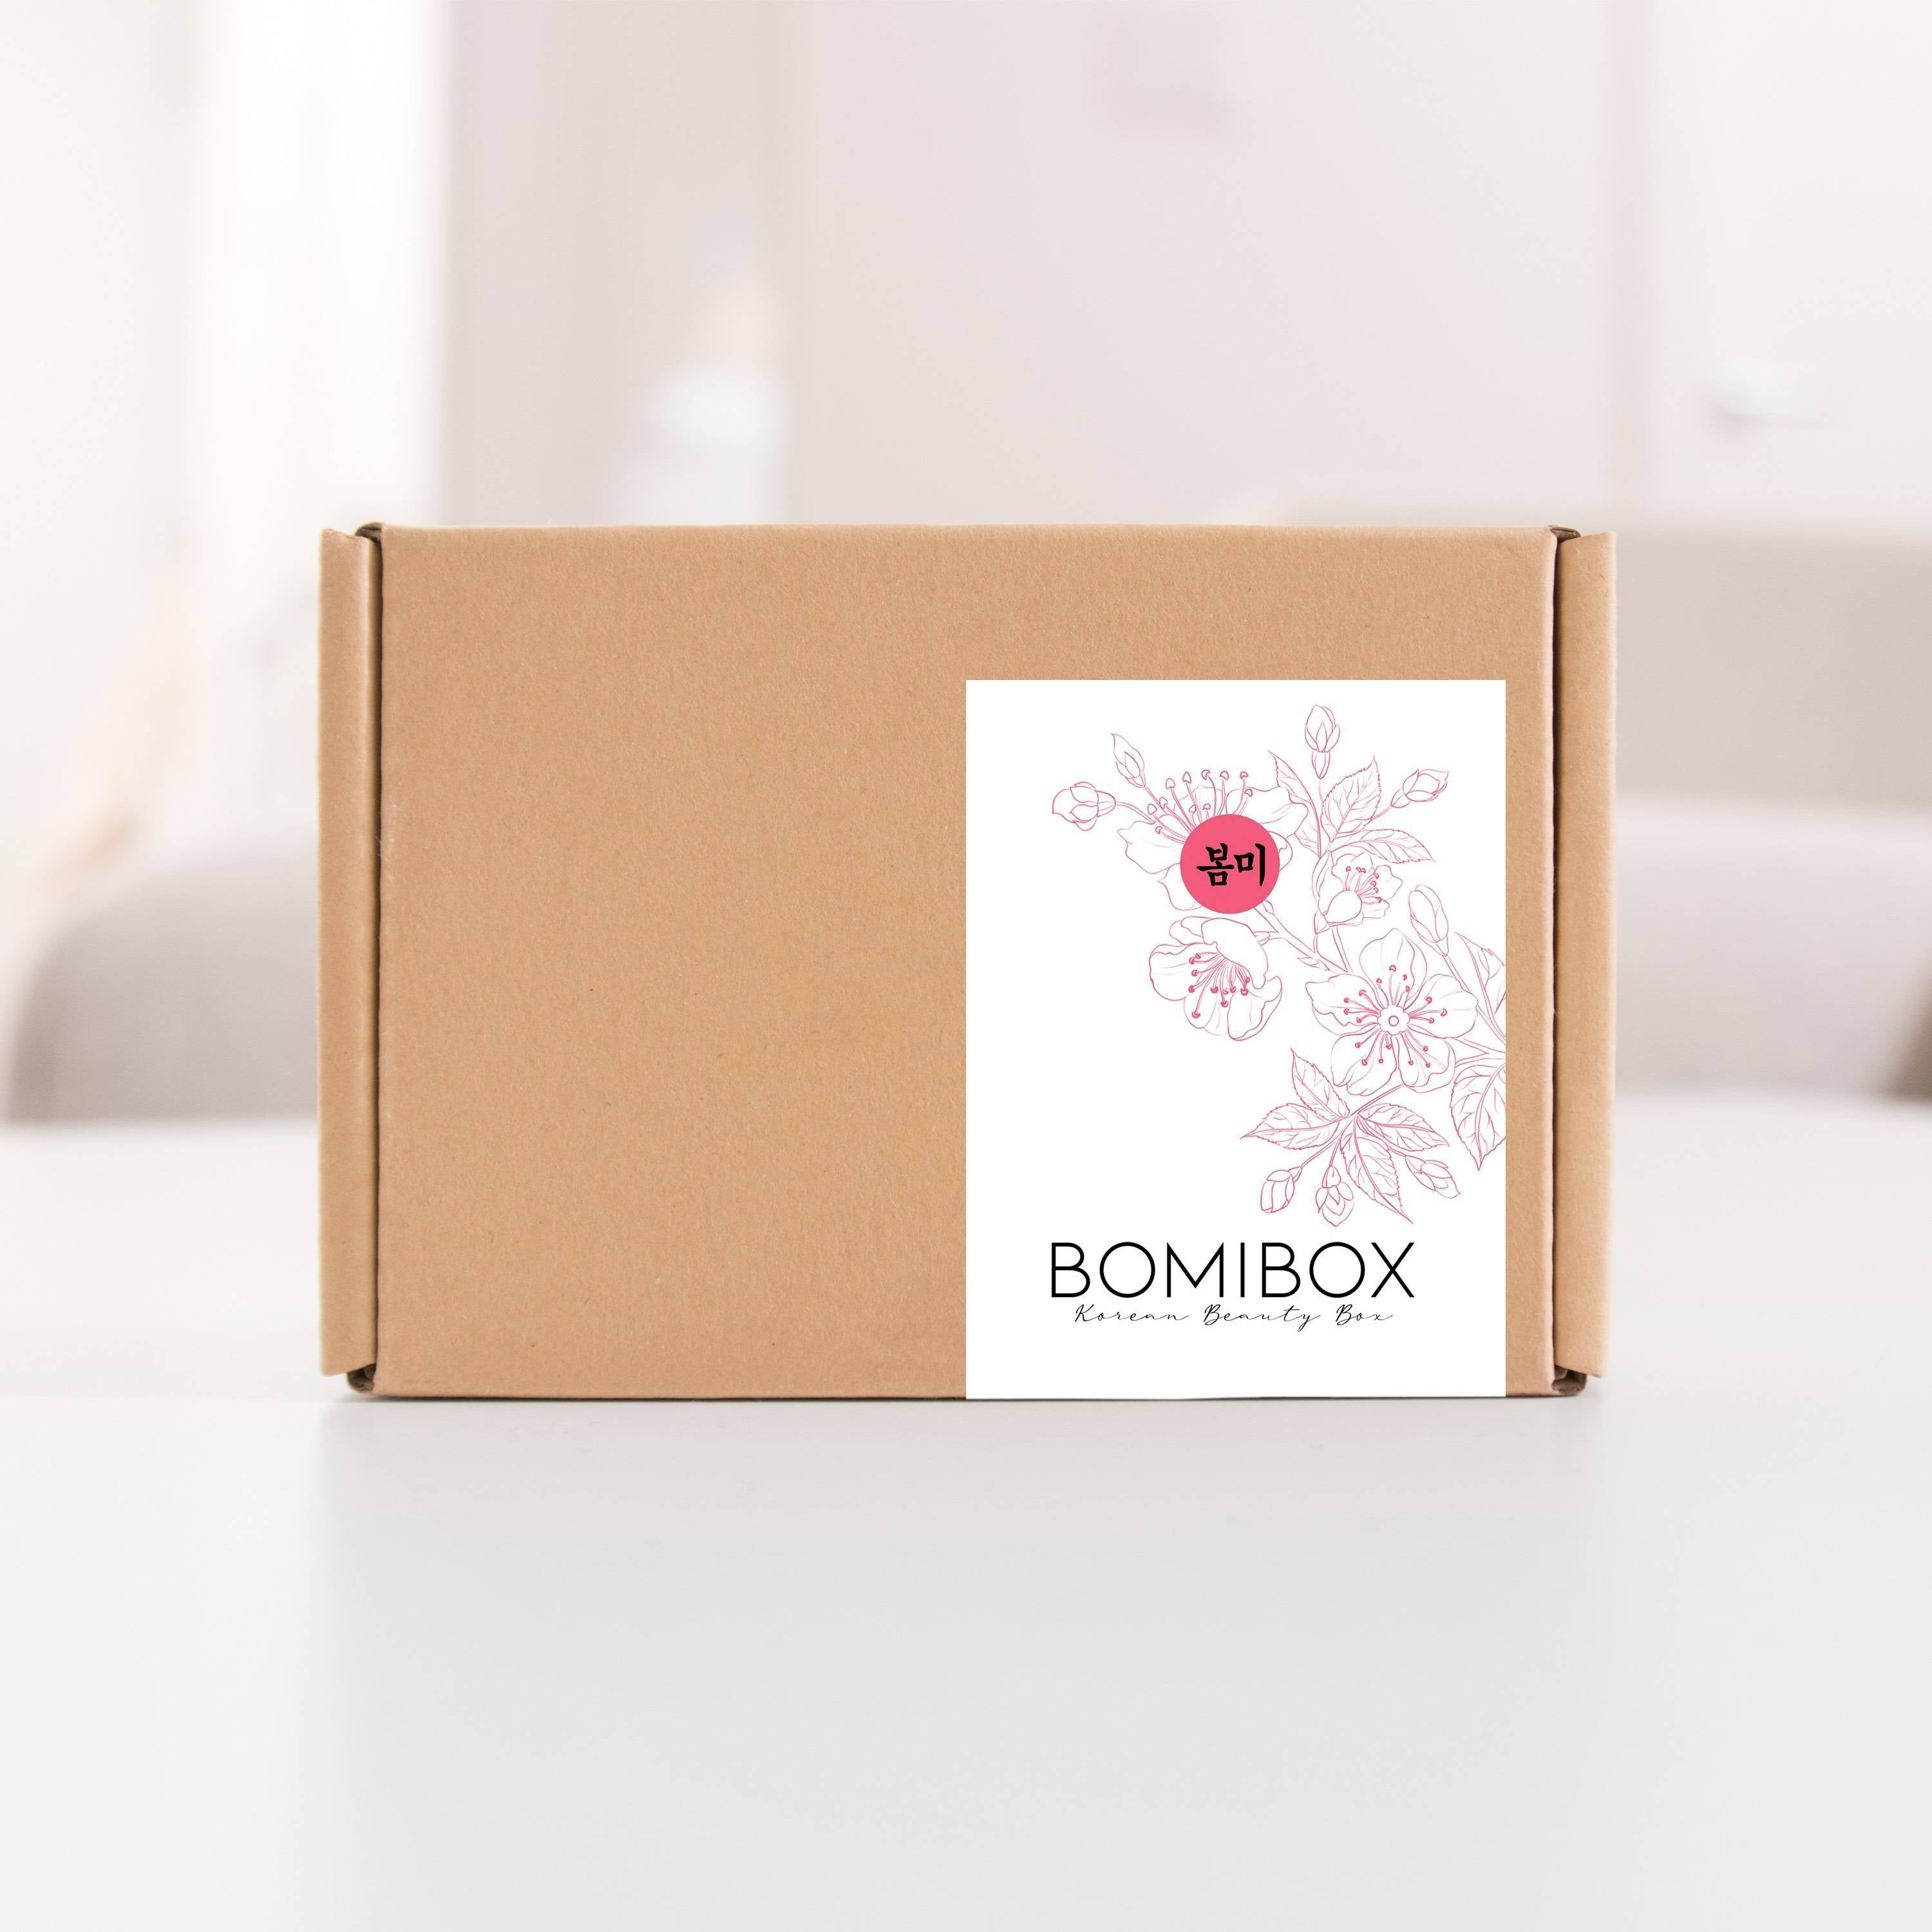 Past Boxes-Bomibox Self Care Everyday #4 - Korean Beauty Box Monthly Korean Skincare Subscription